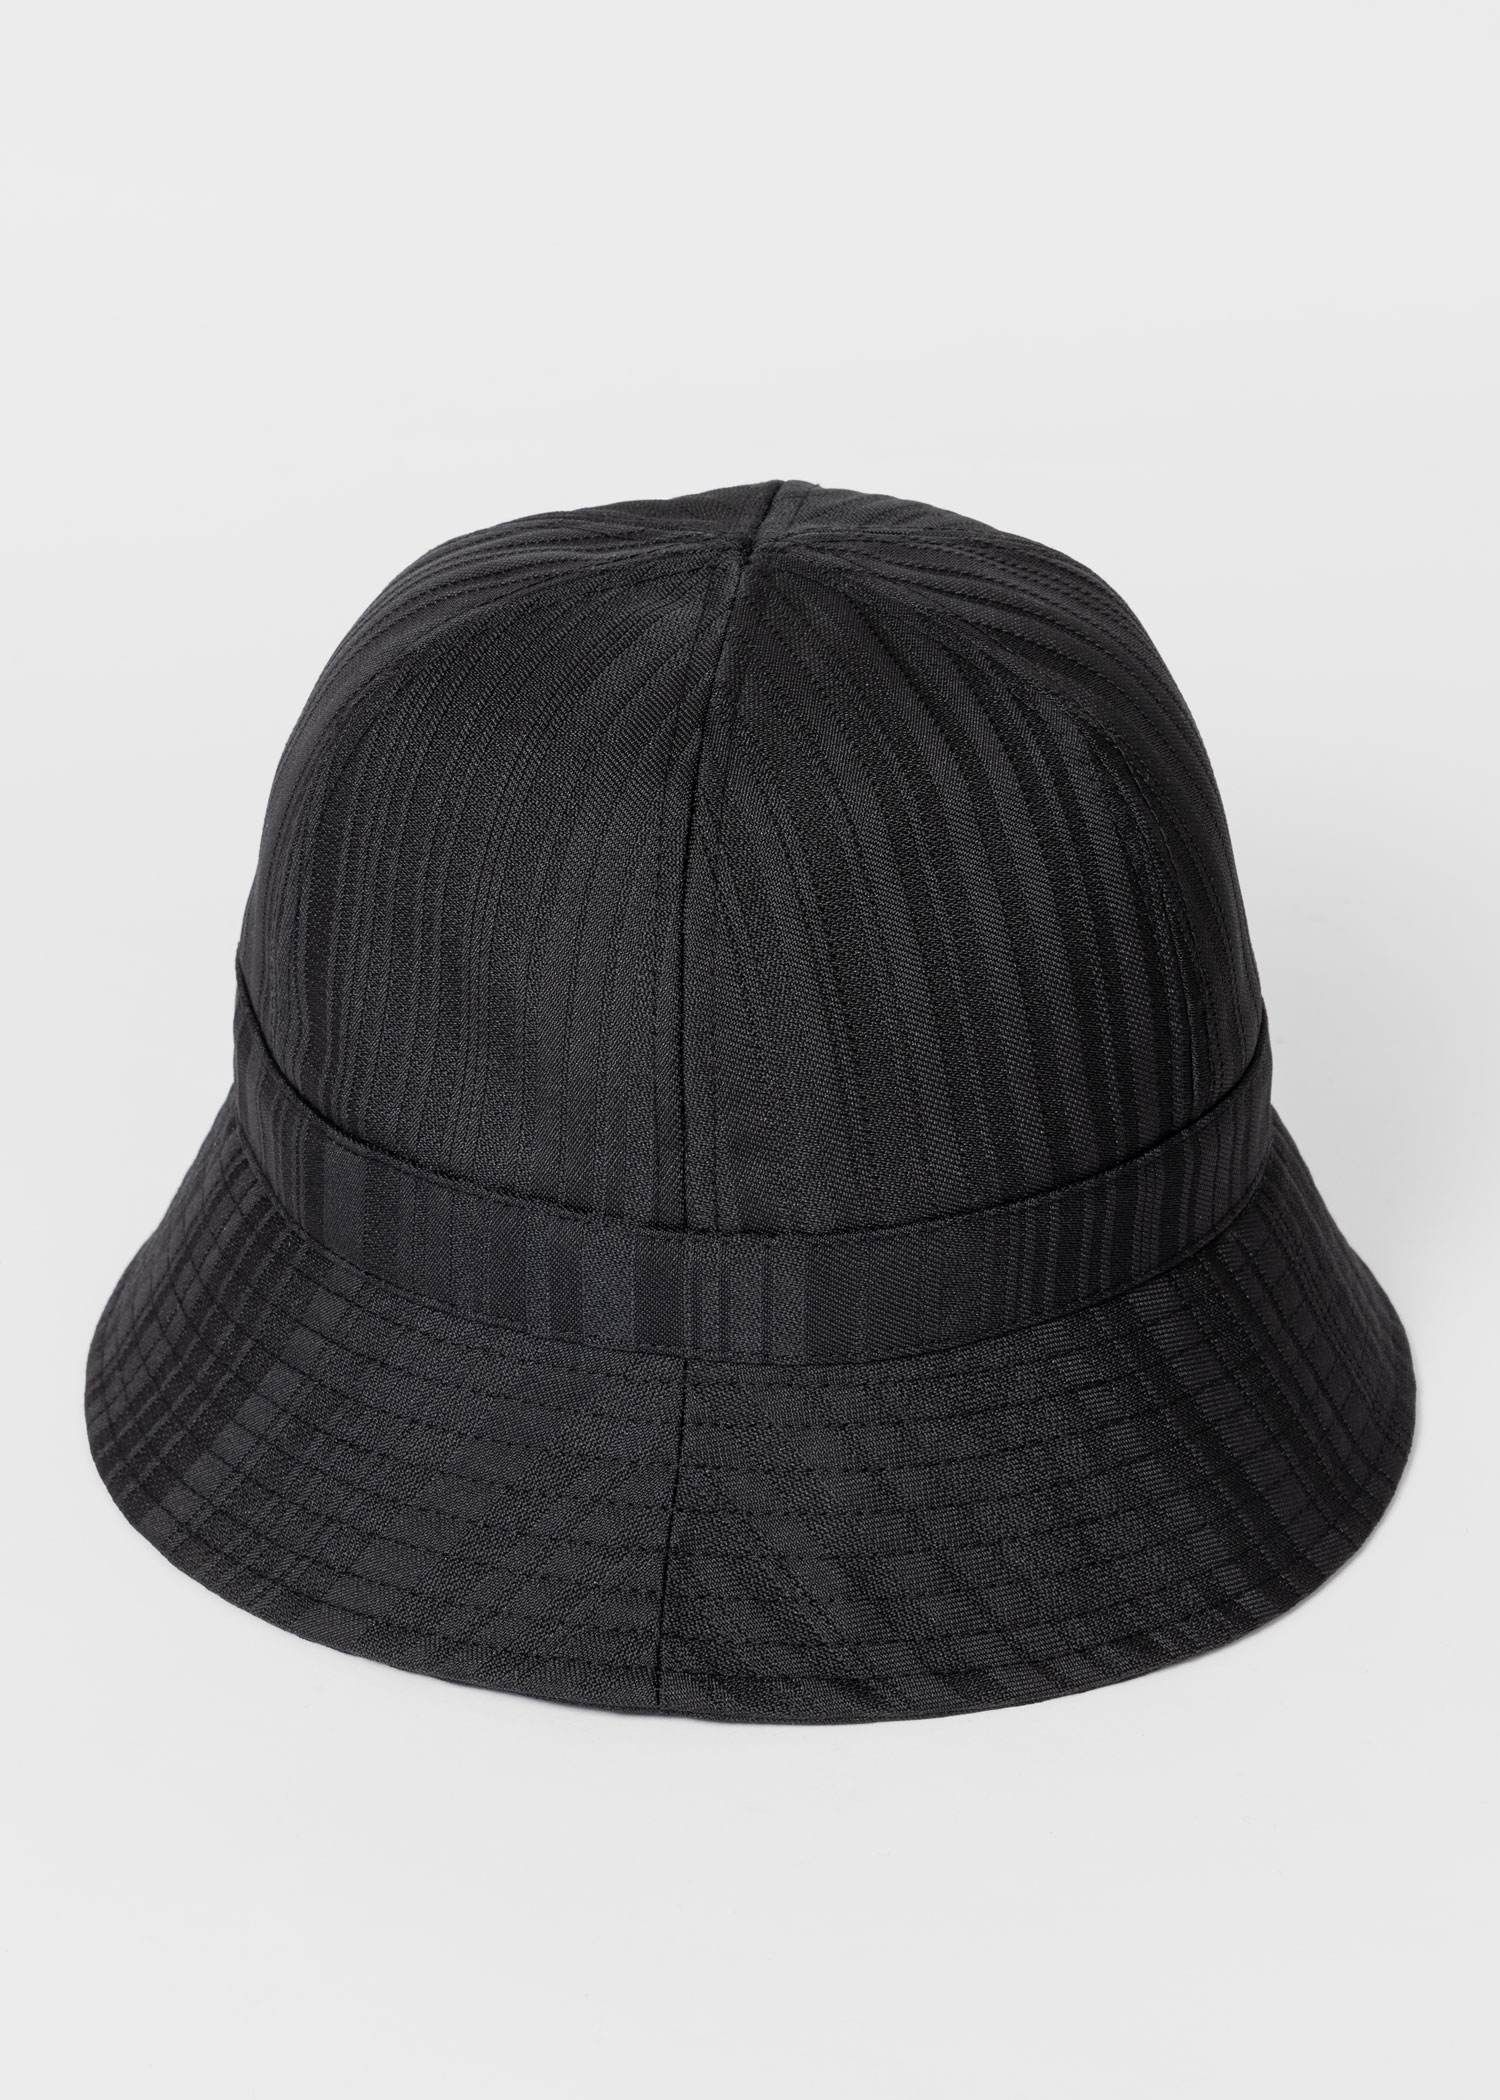 Paul Smith MEN HAT SUN SIGNATURE - Hat - black 